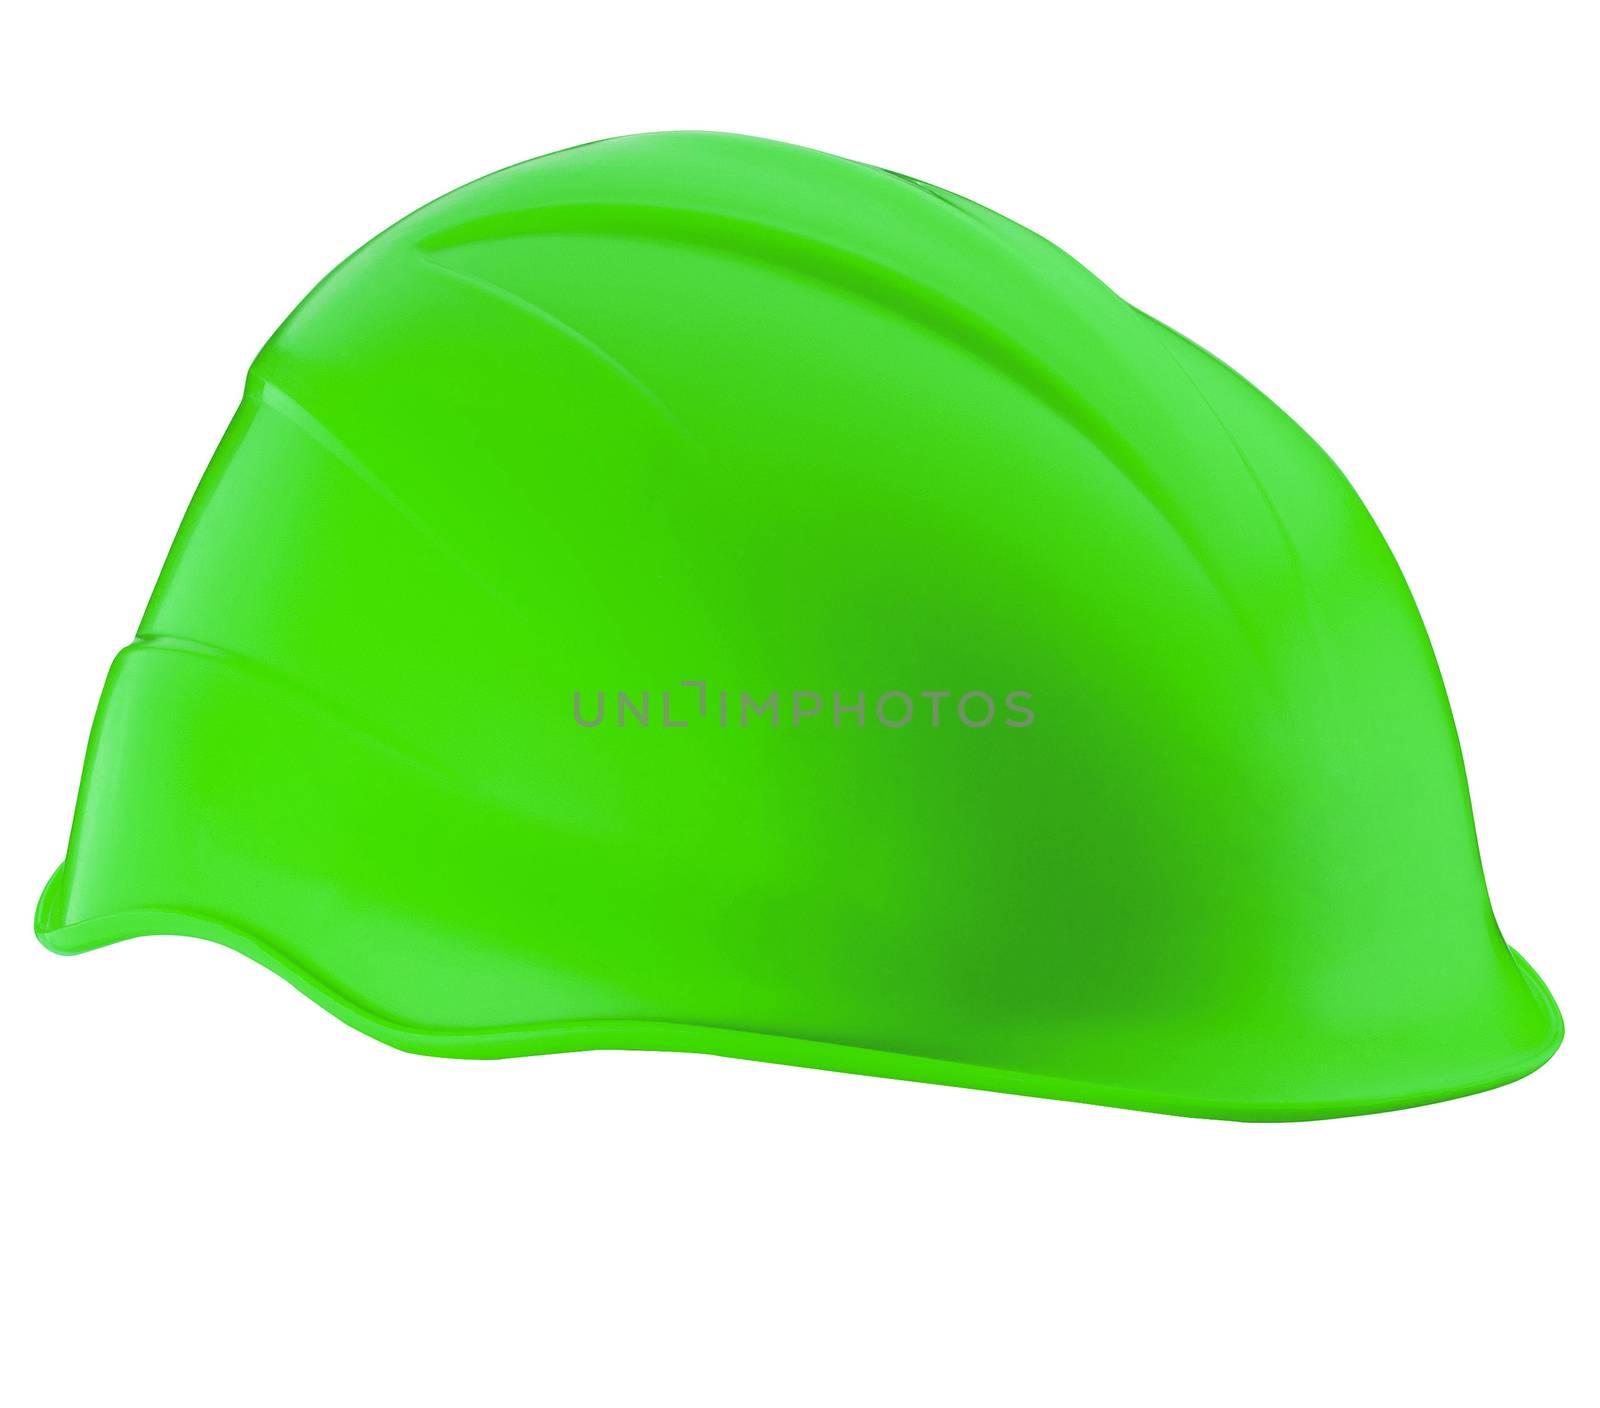 Safety Helmet green by ozaiachin